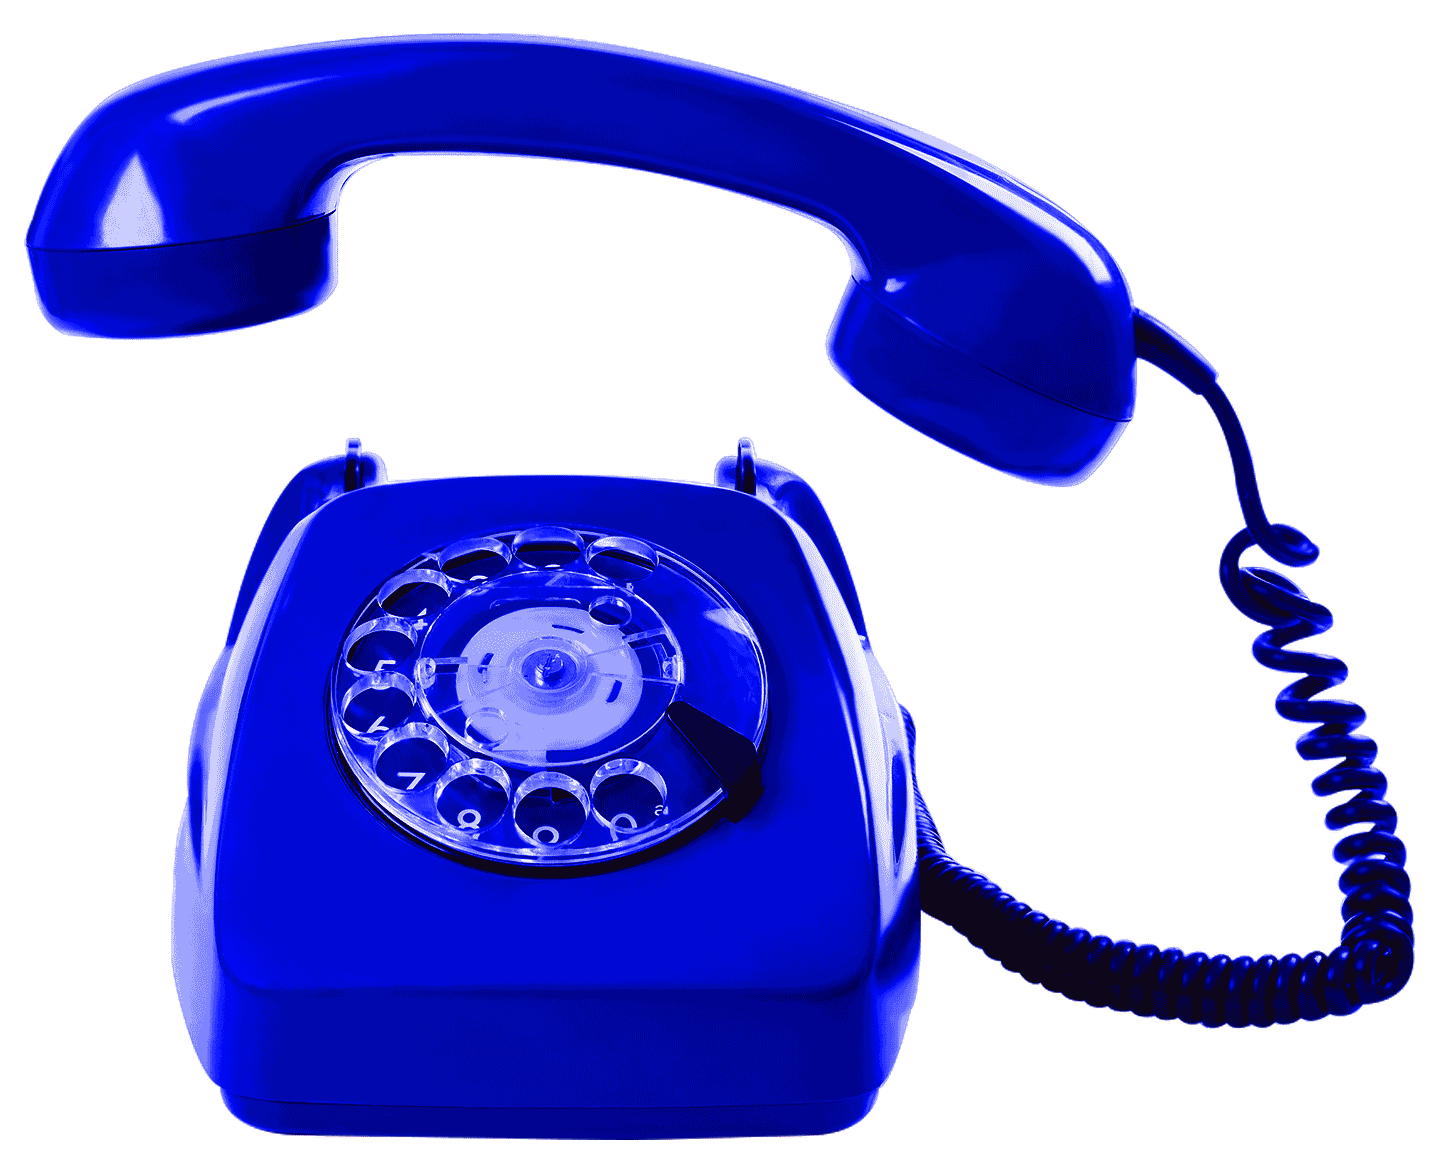 06 звонок. Телефон. Синий телефон. Телефонная трубка. Телефонный аппарат стационарный.